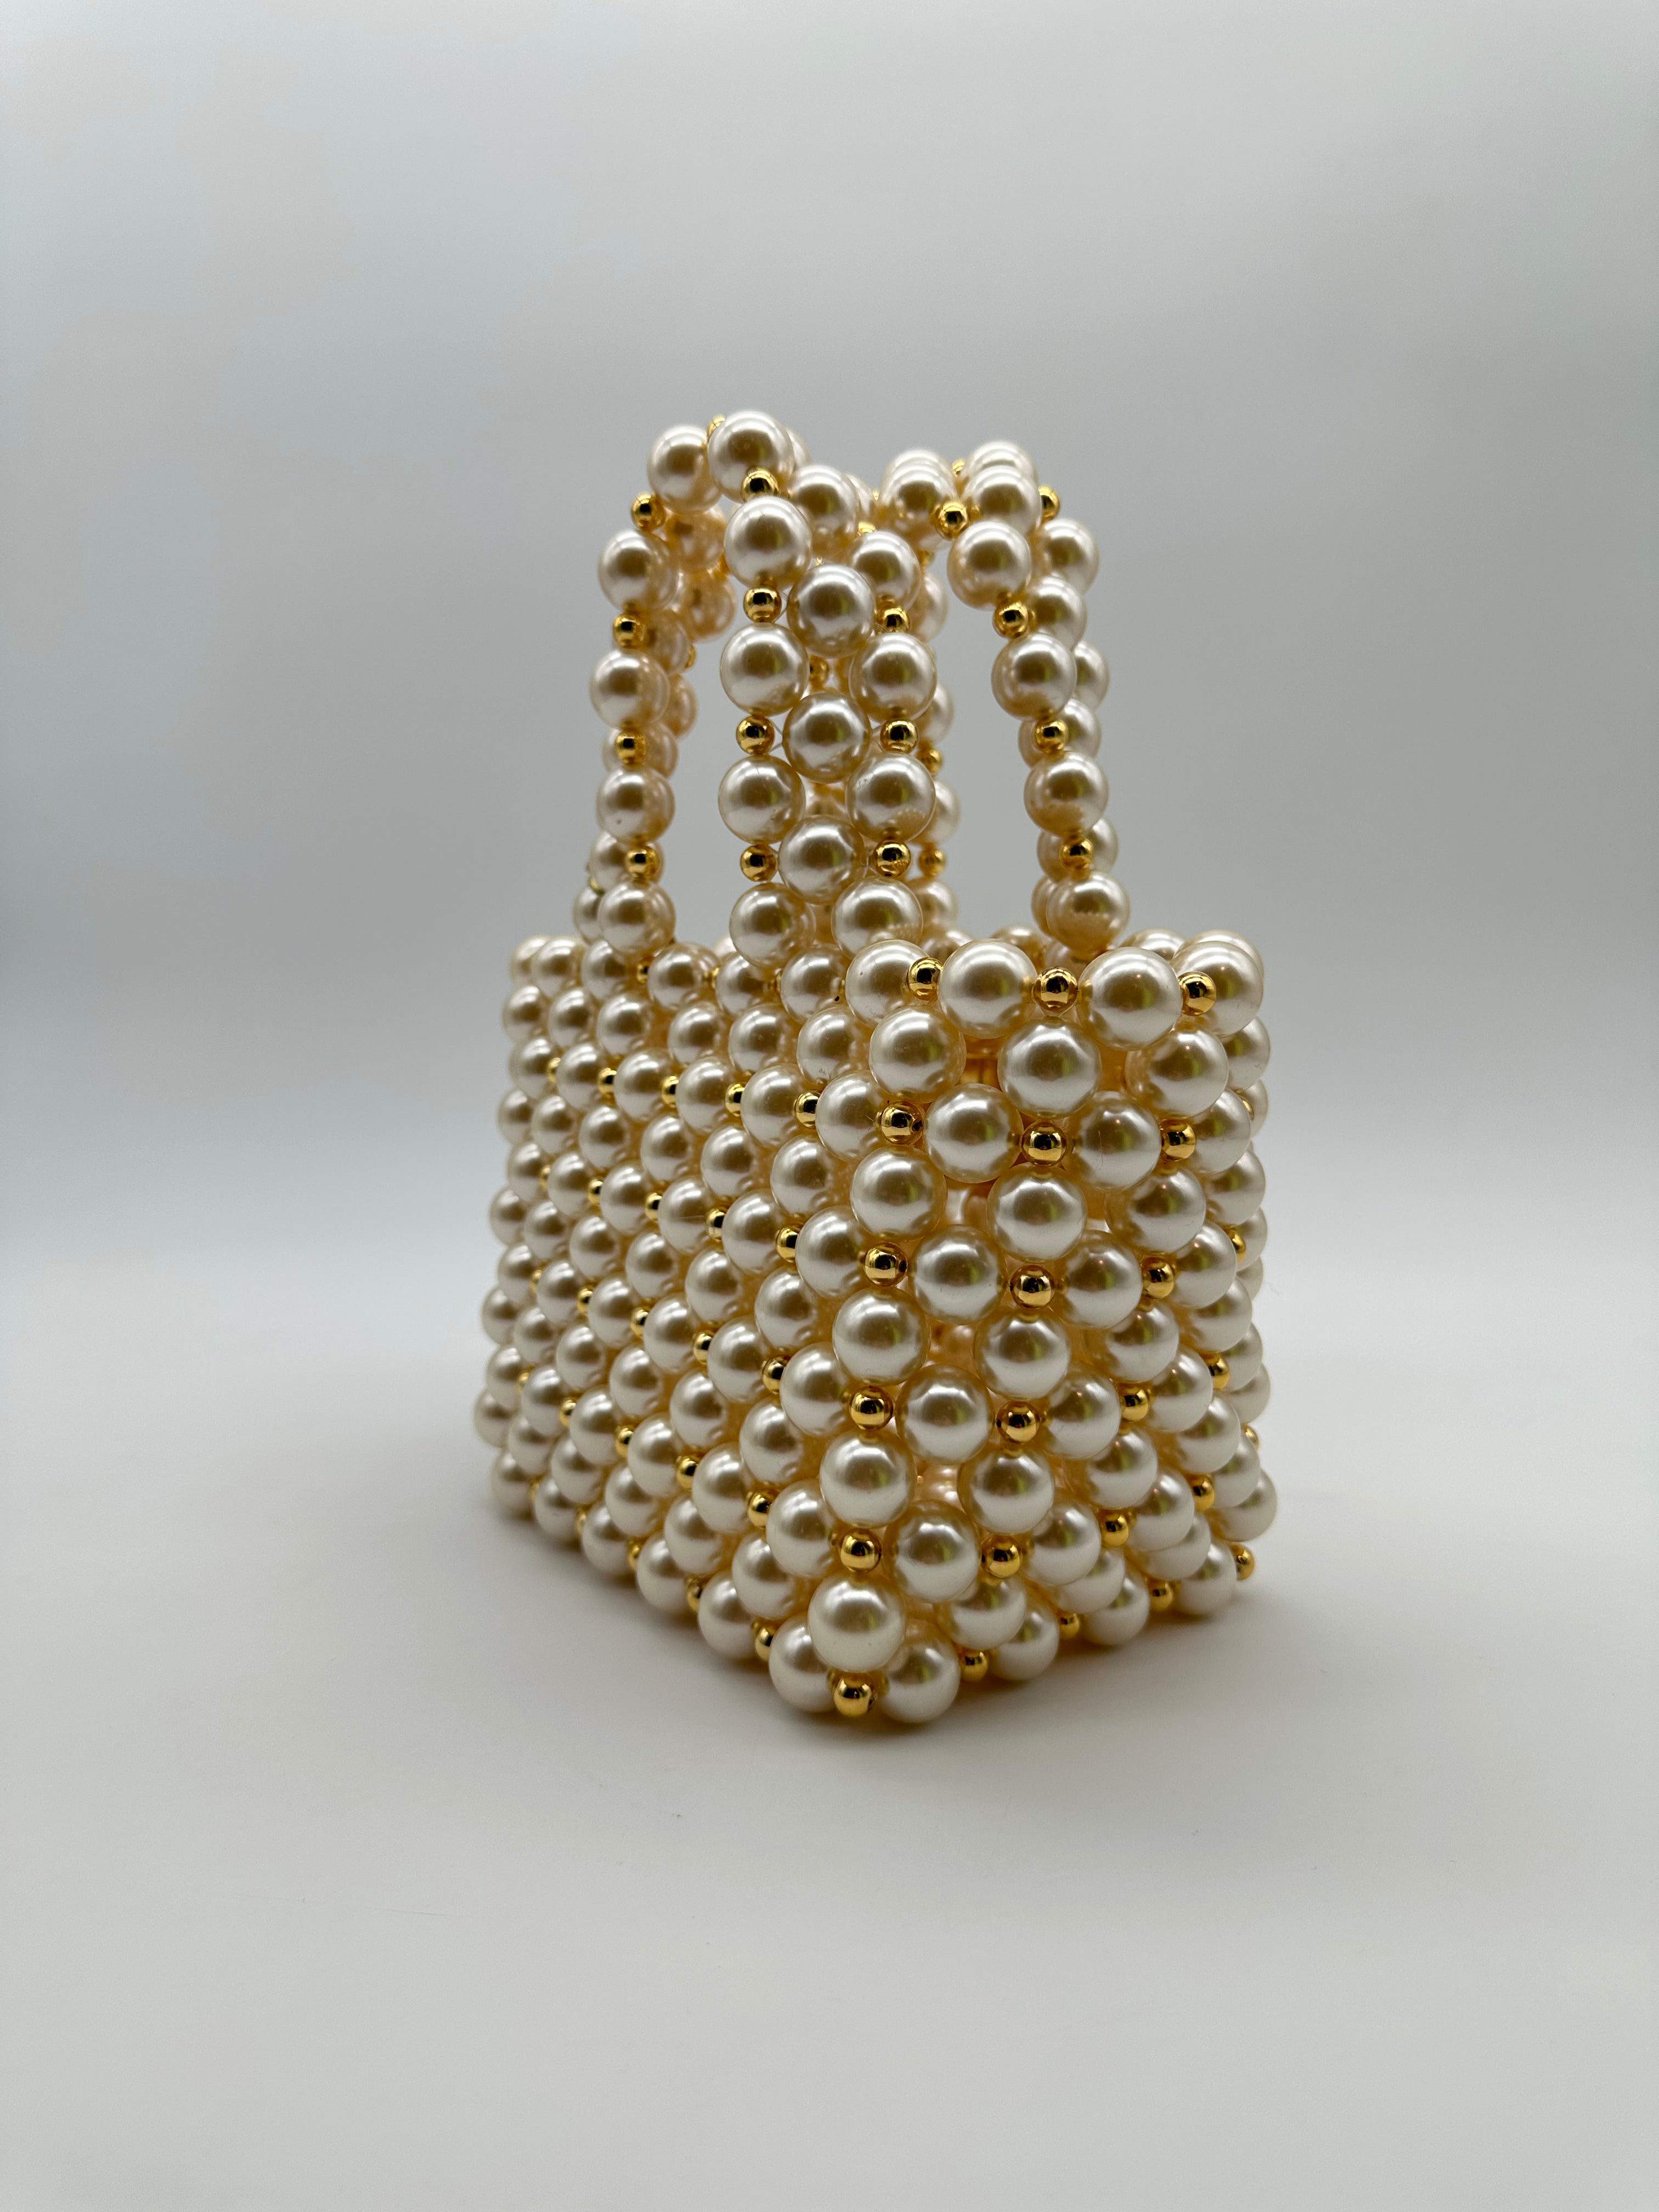 Handbags With Pearls